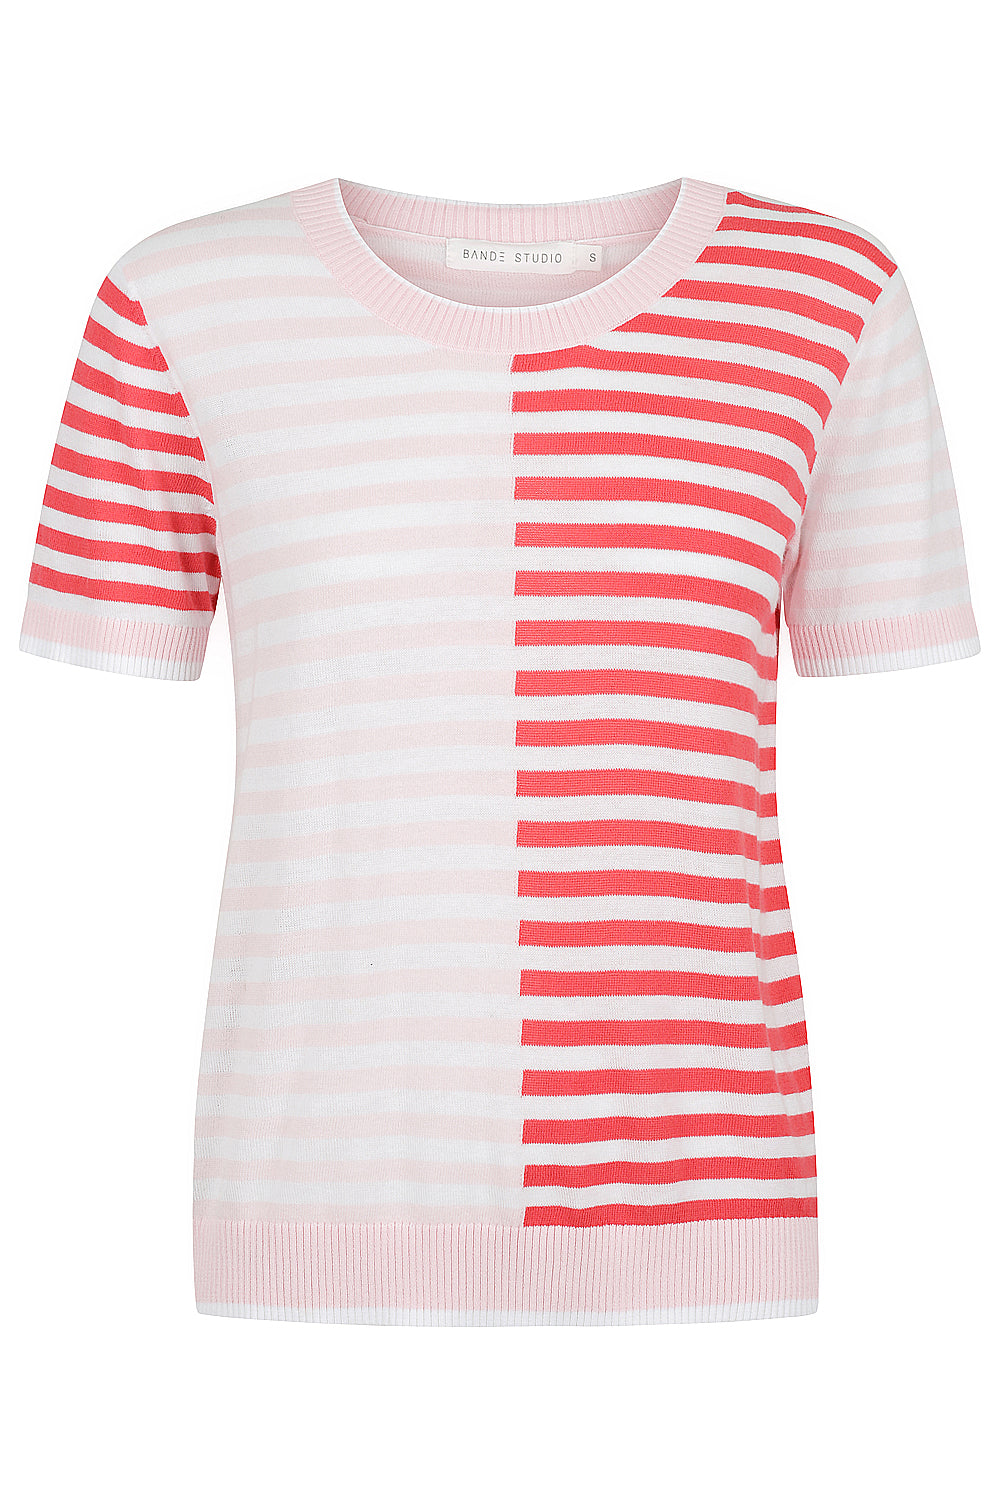 Colour Block Stripe Knit Tee - peony / raspberry red